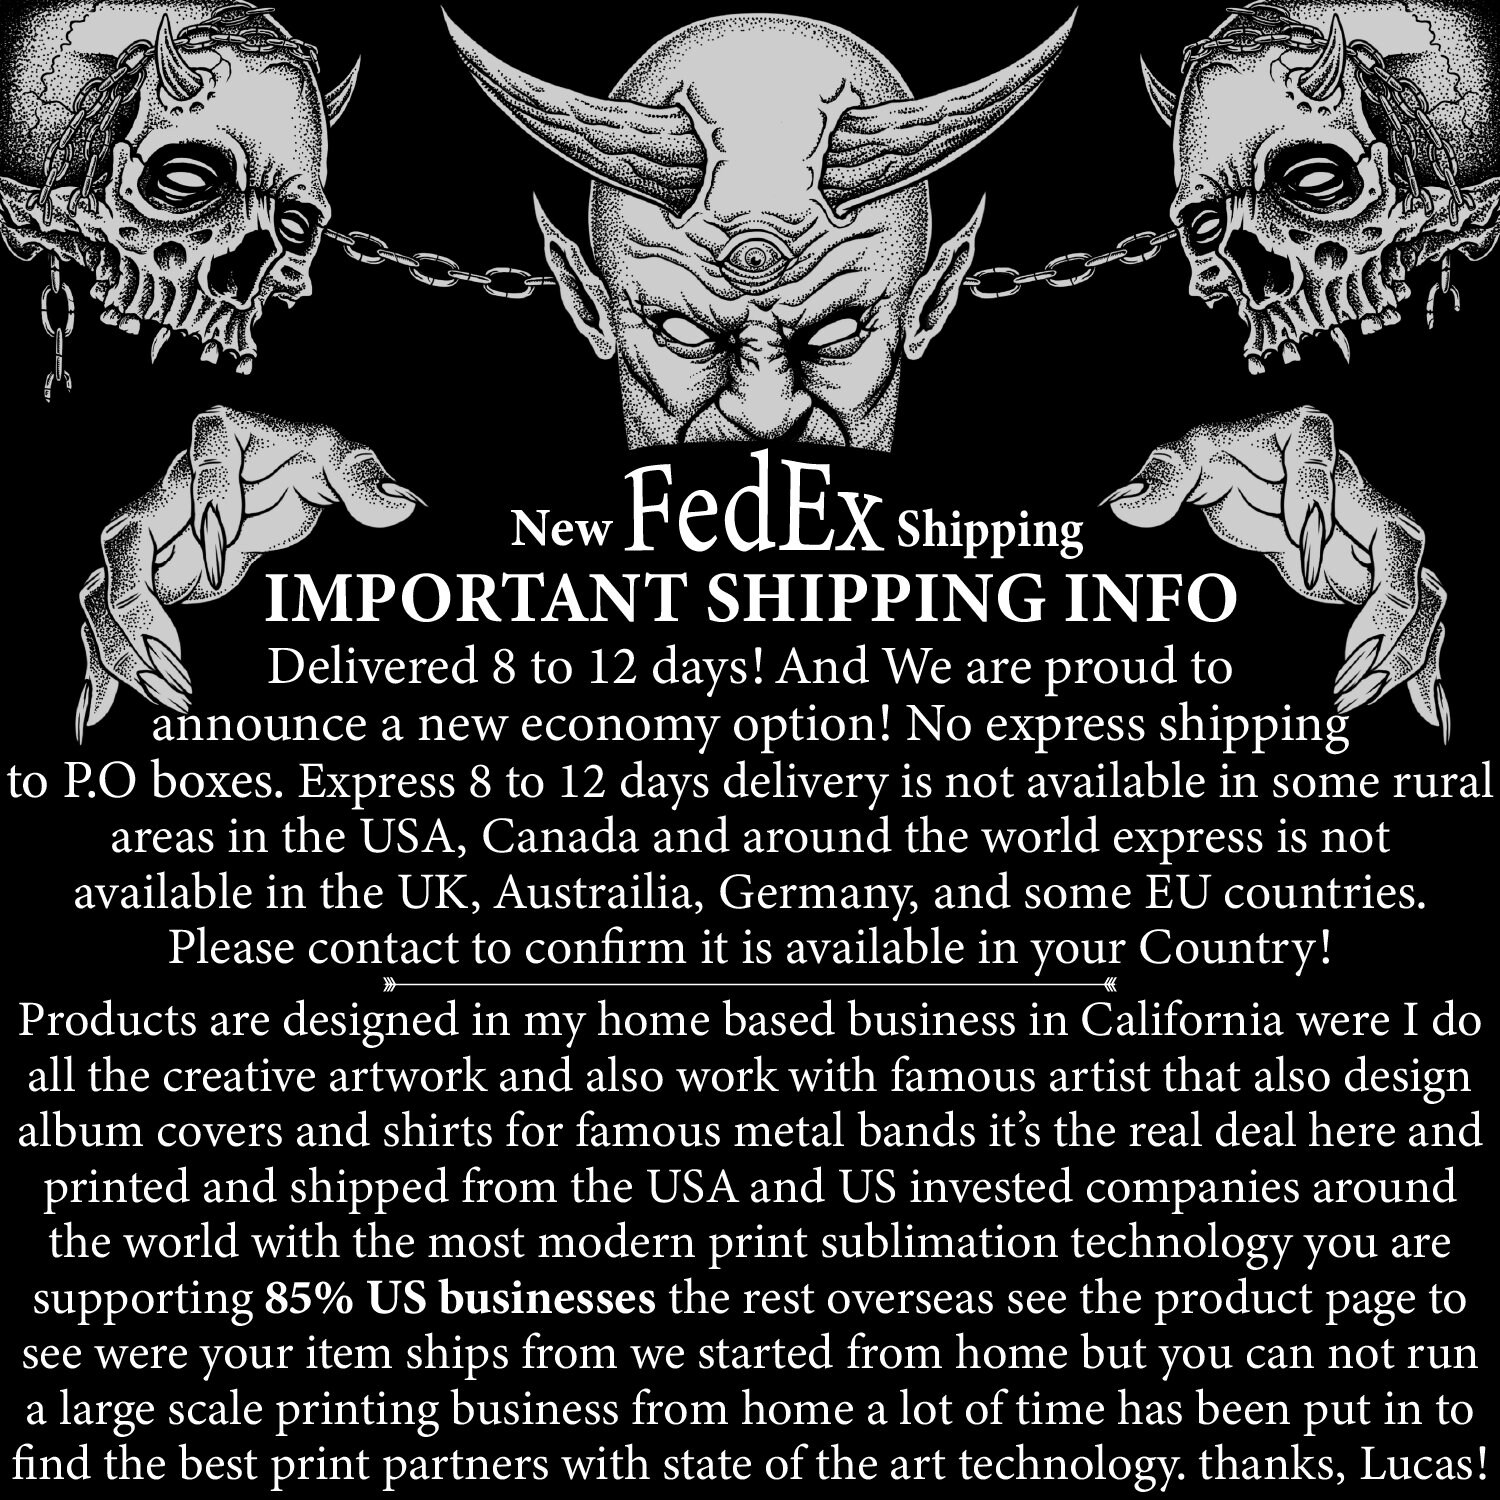 Discover Skull Satanic Pentagram Demon Nymphomania And Loving It Bedding Set